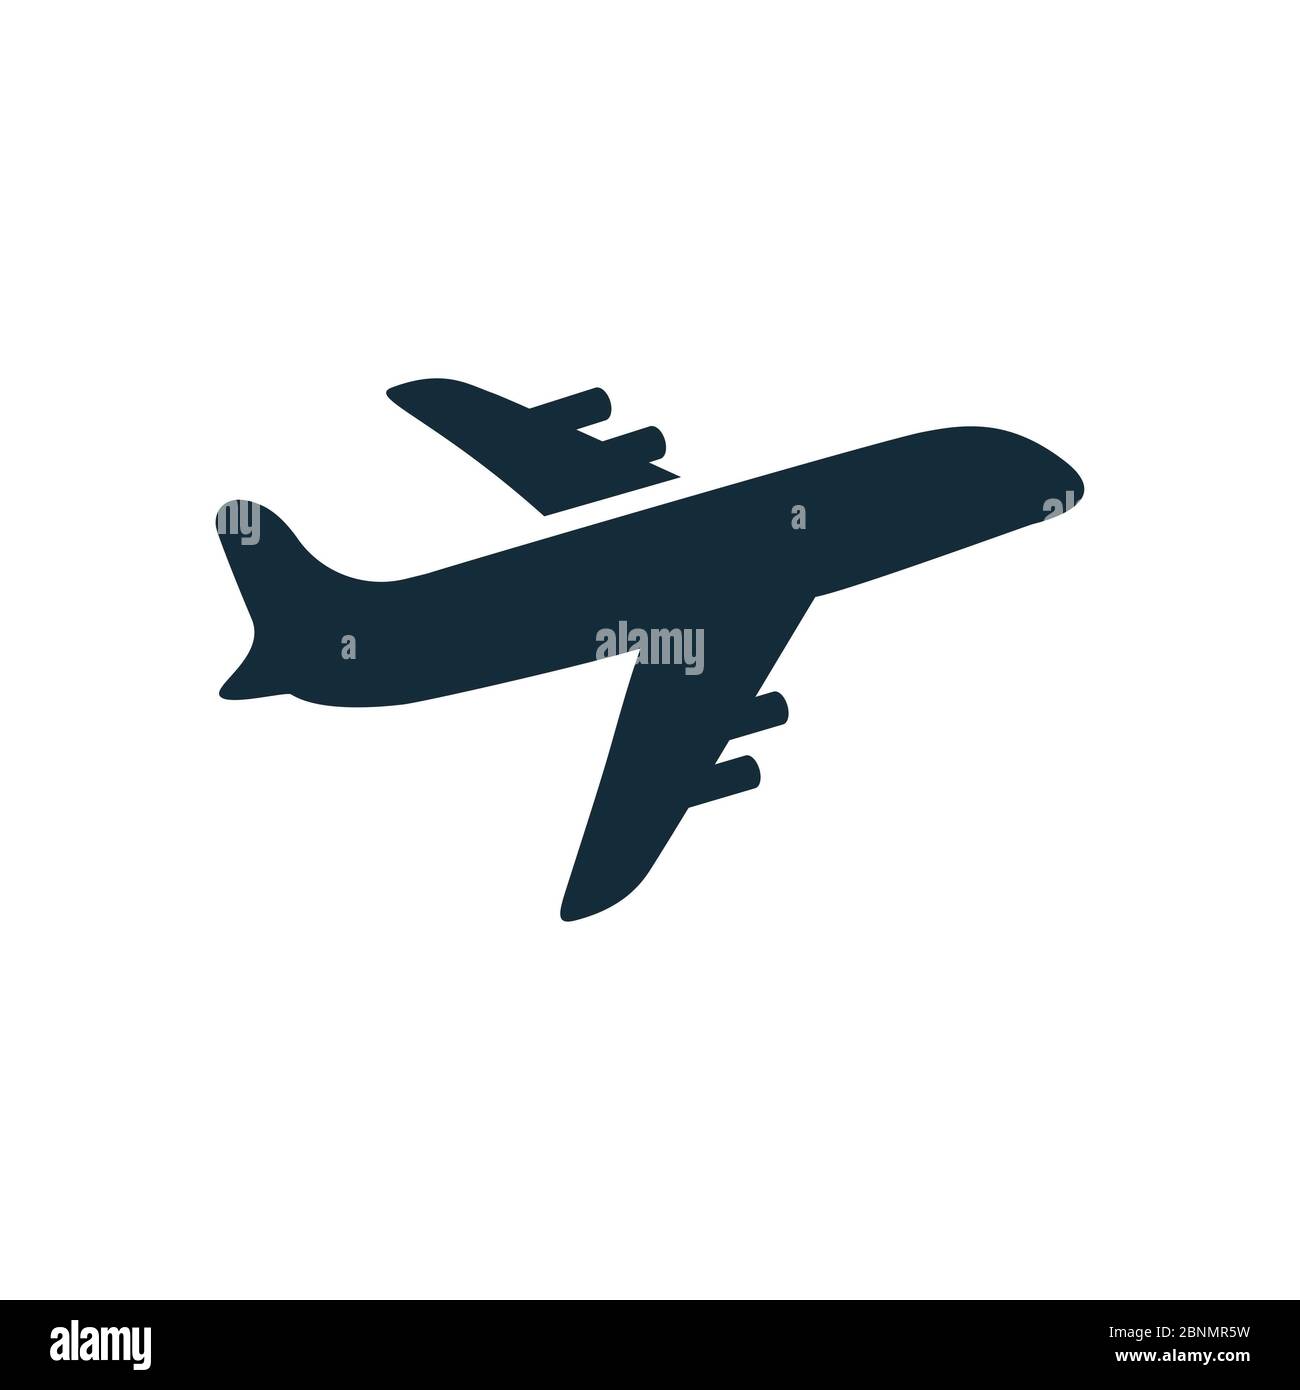 Airplane Logo PNG Images, Transparent Airplane Logo Image Download - PNGitem